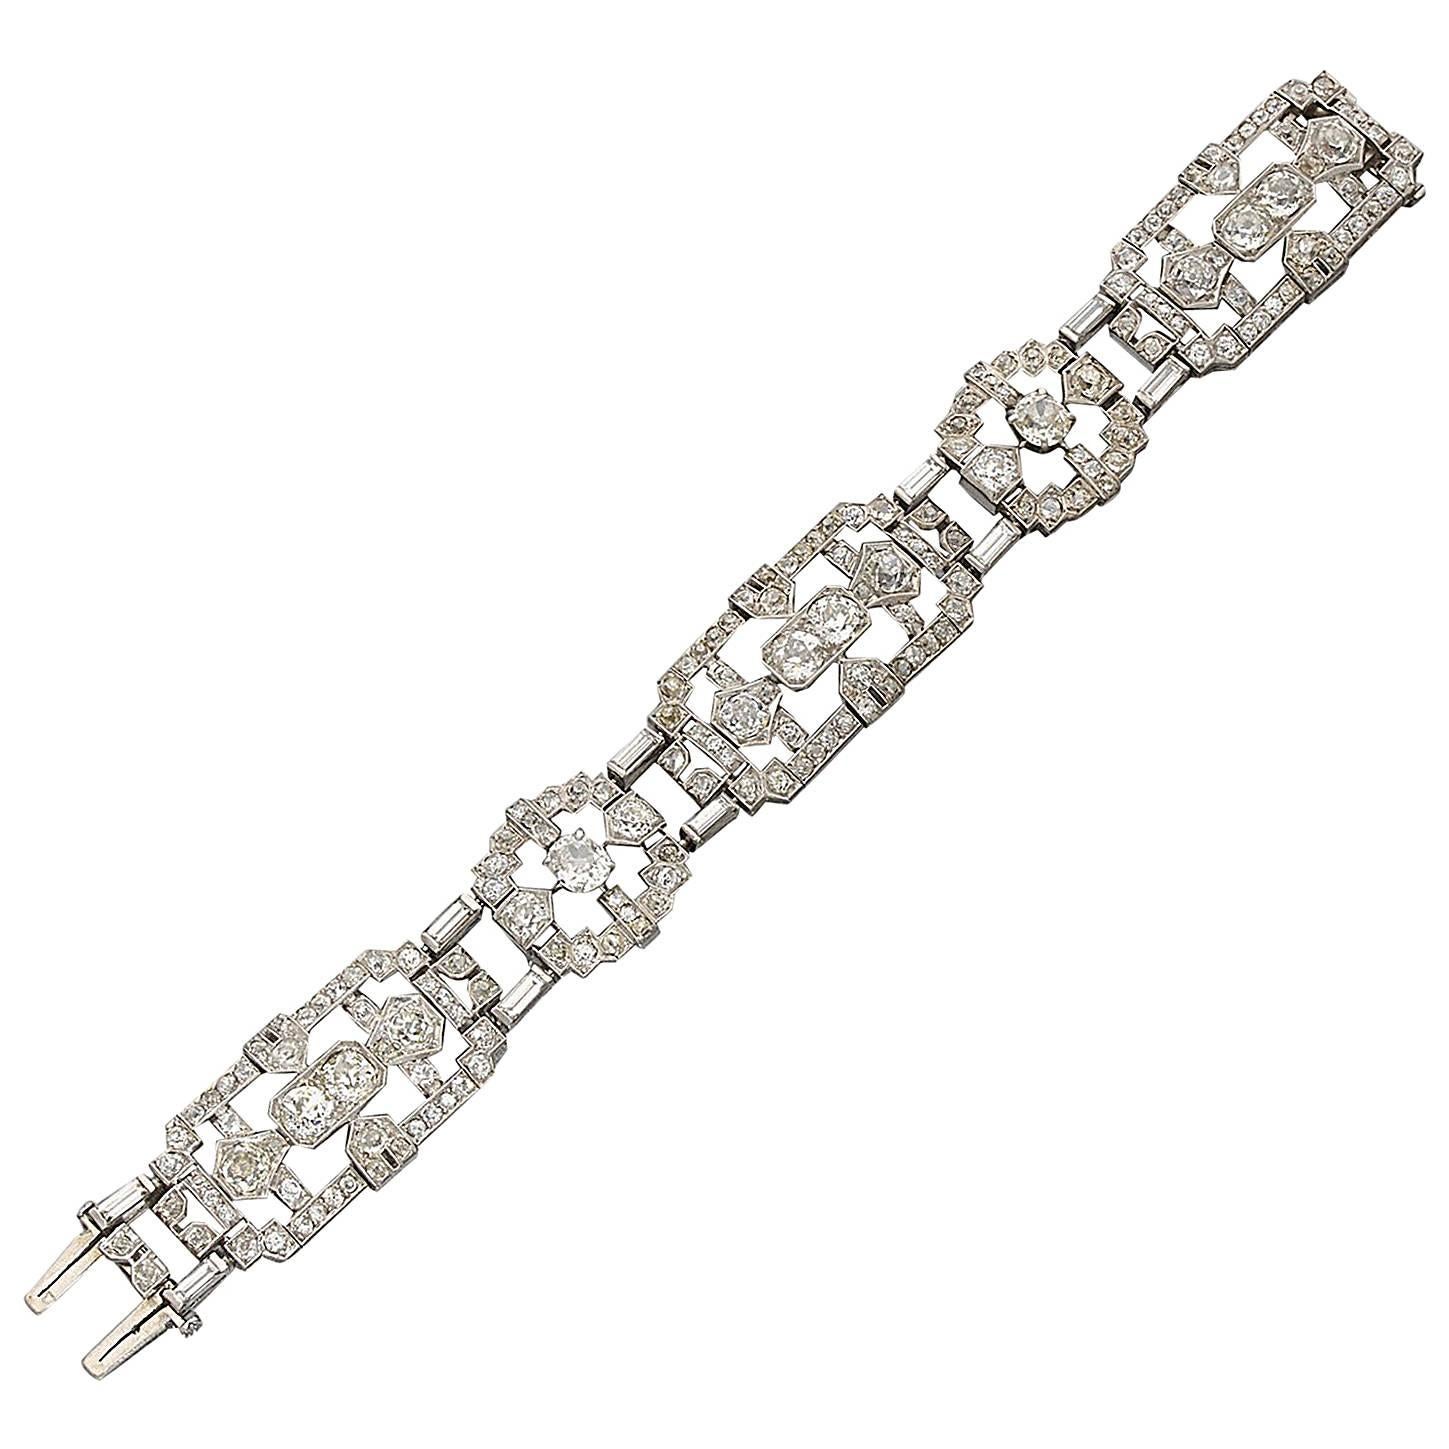 1925 French Art Deco Diamond and Platinum Bracelet